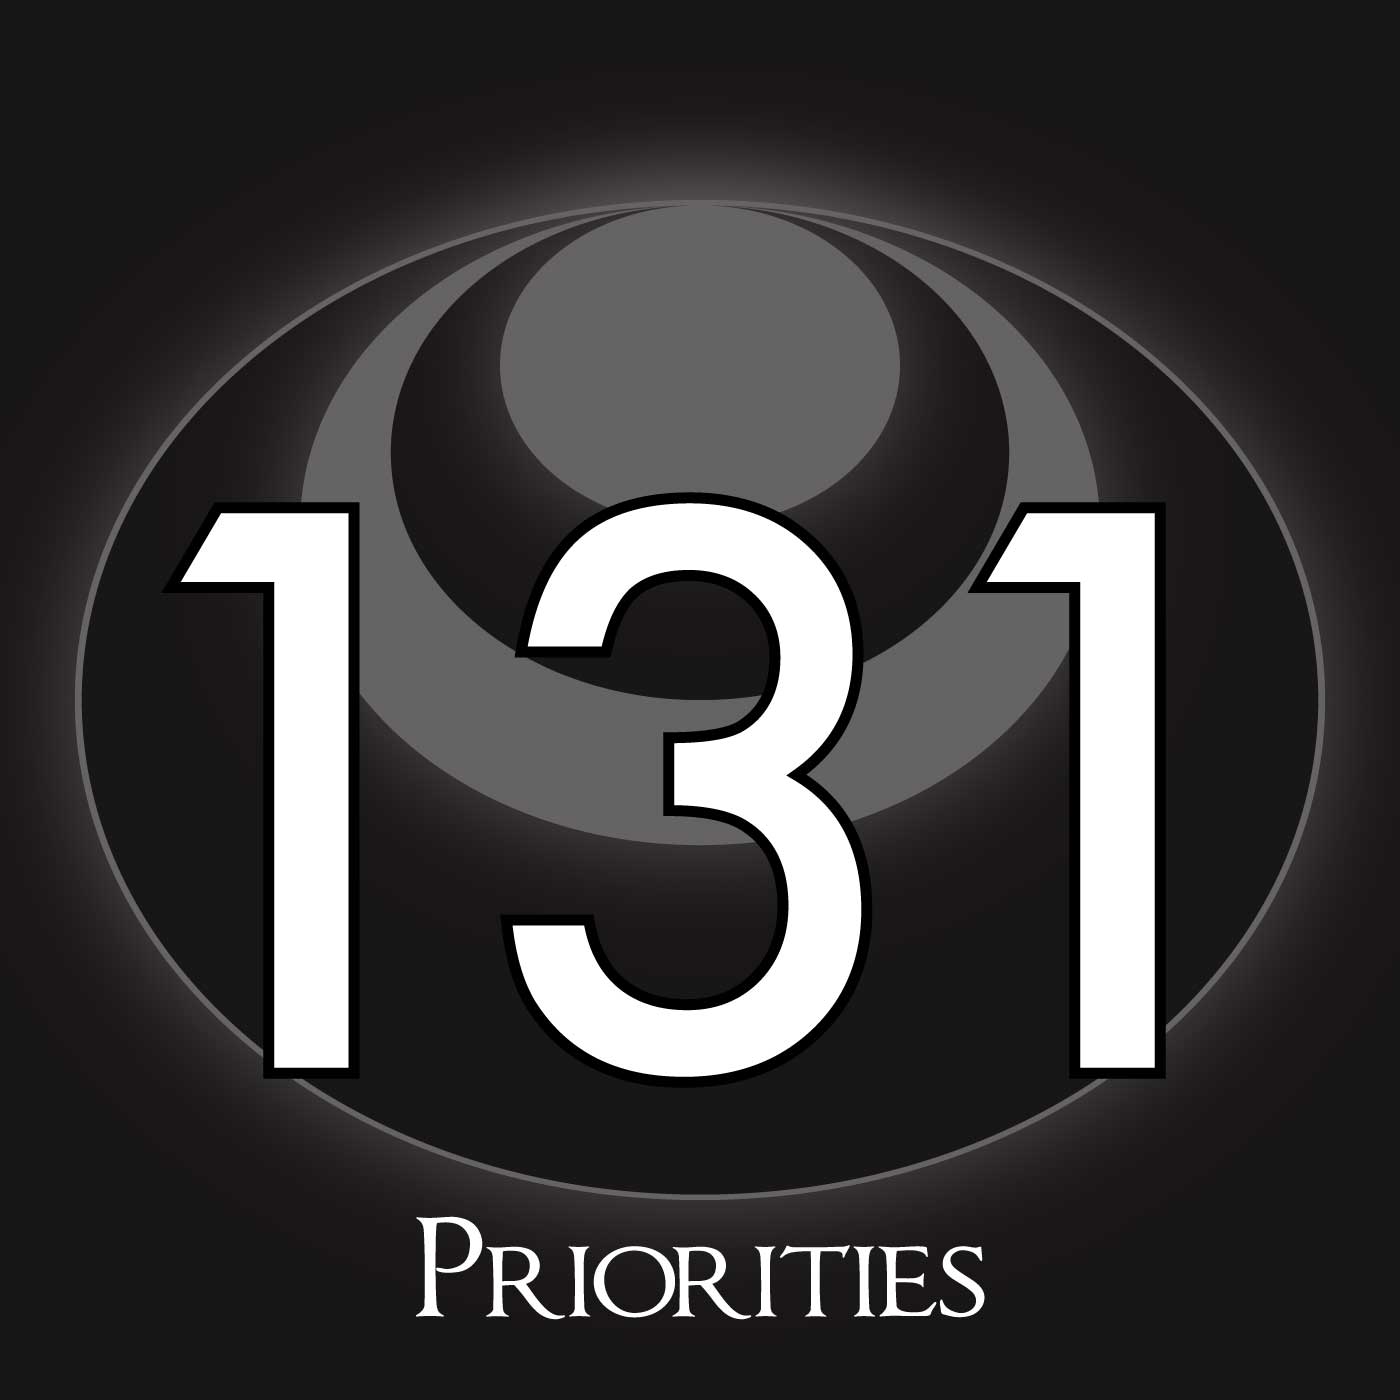 131 – Priorities